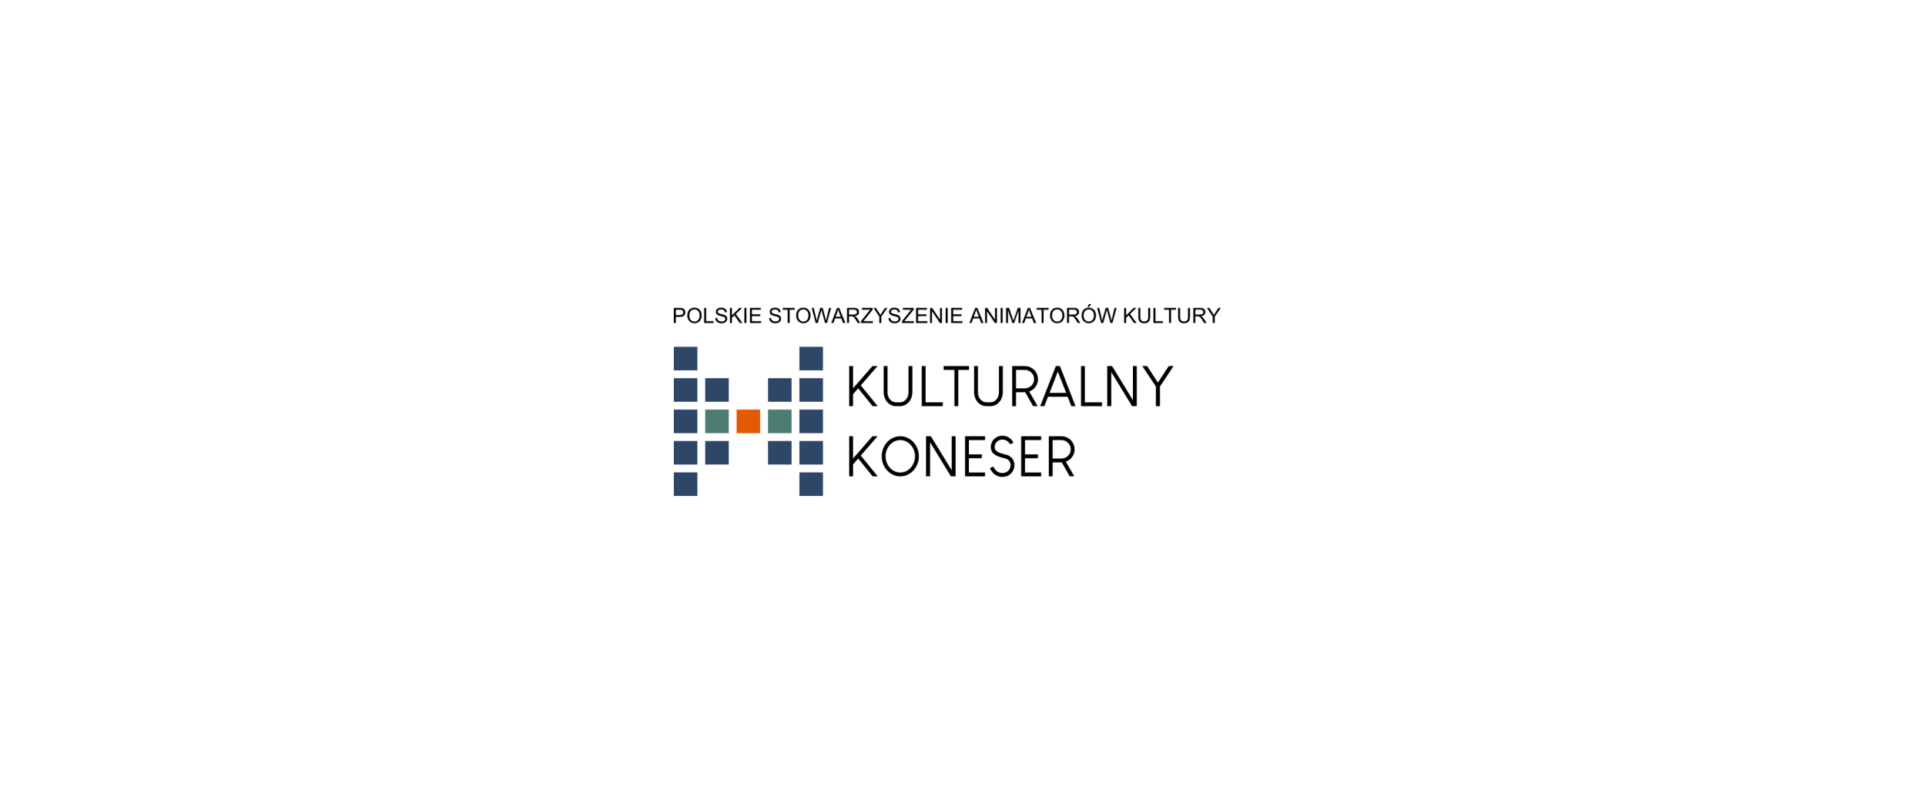 Author: Kulturalny Koneser